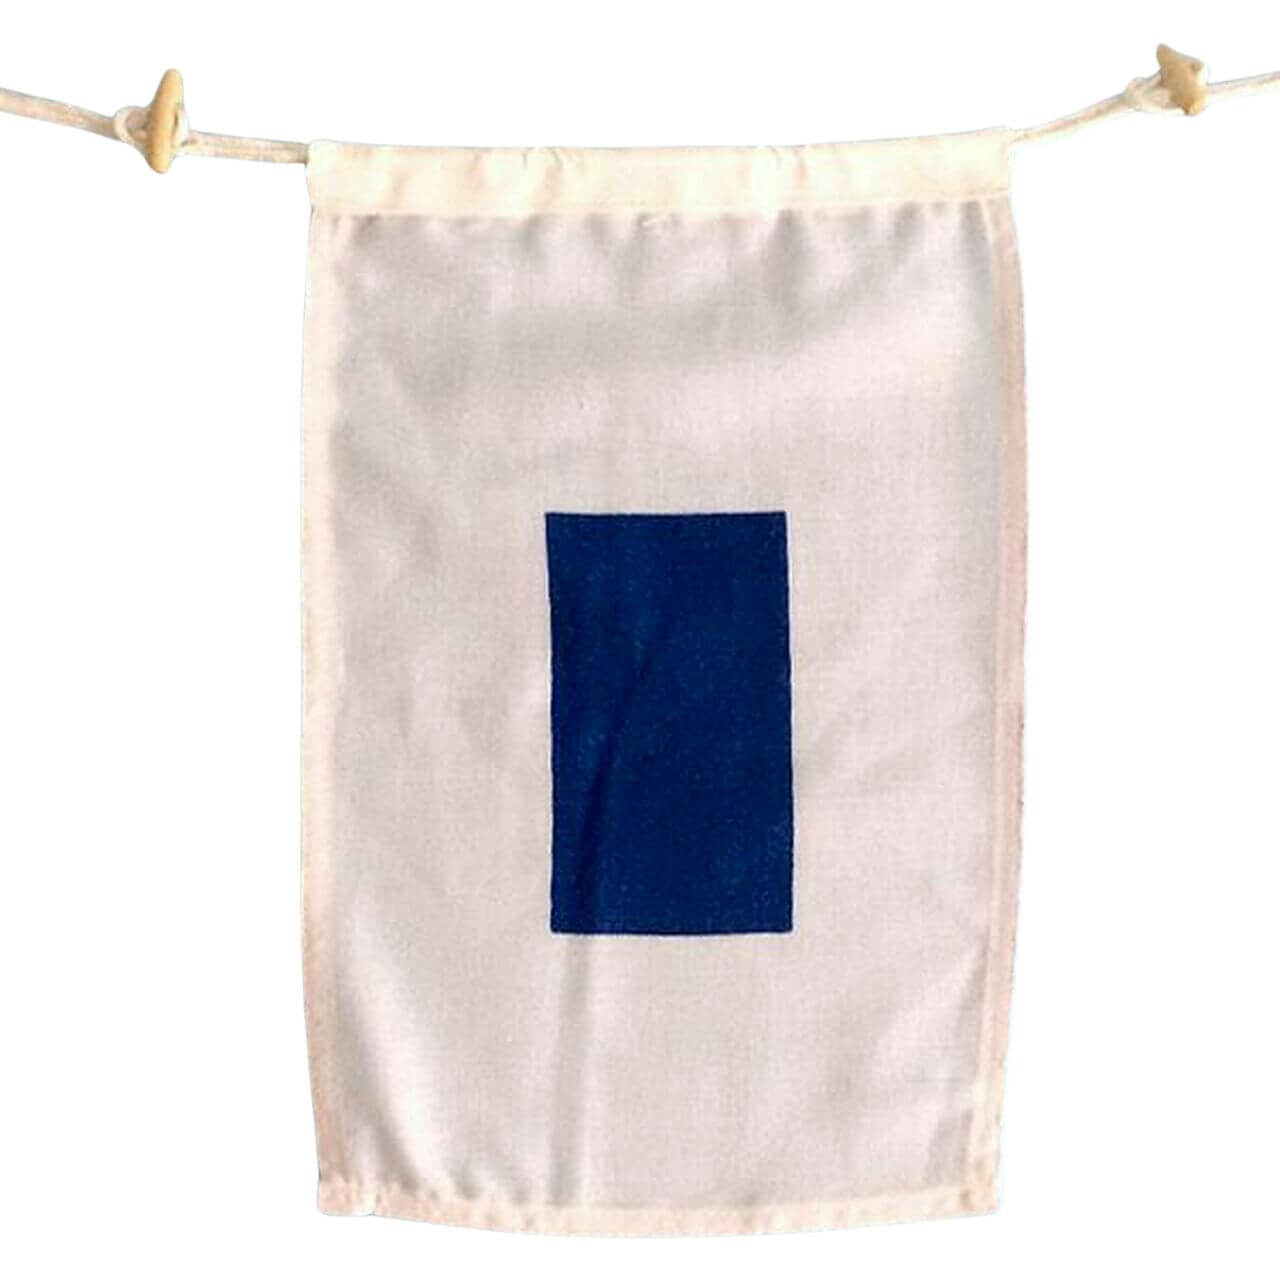 Nautical Flags, A-Z, 0-9, Maritime Signal Flags Decor New England Trading Co S